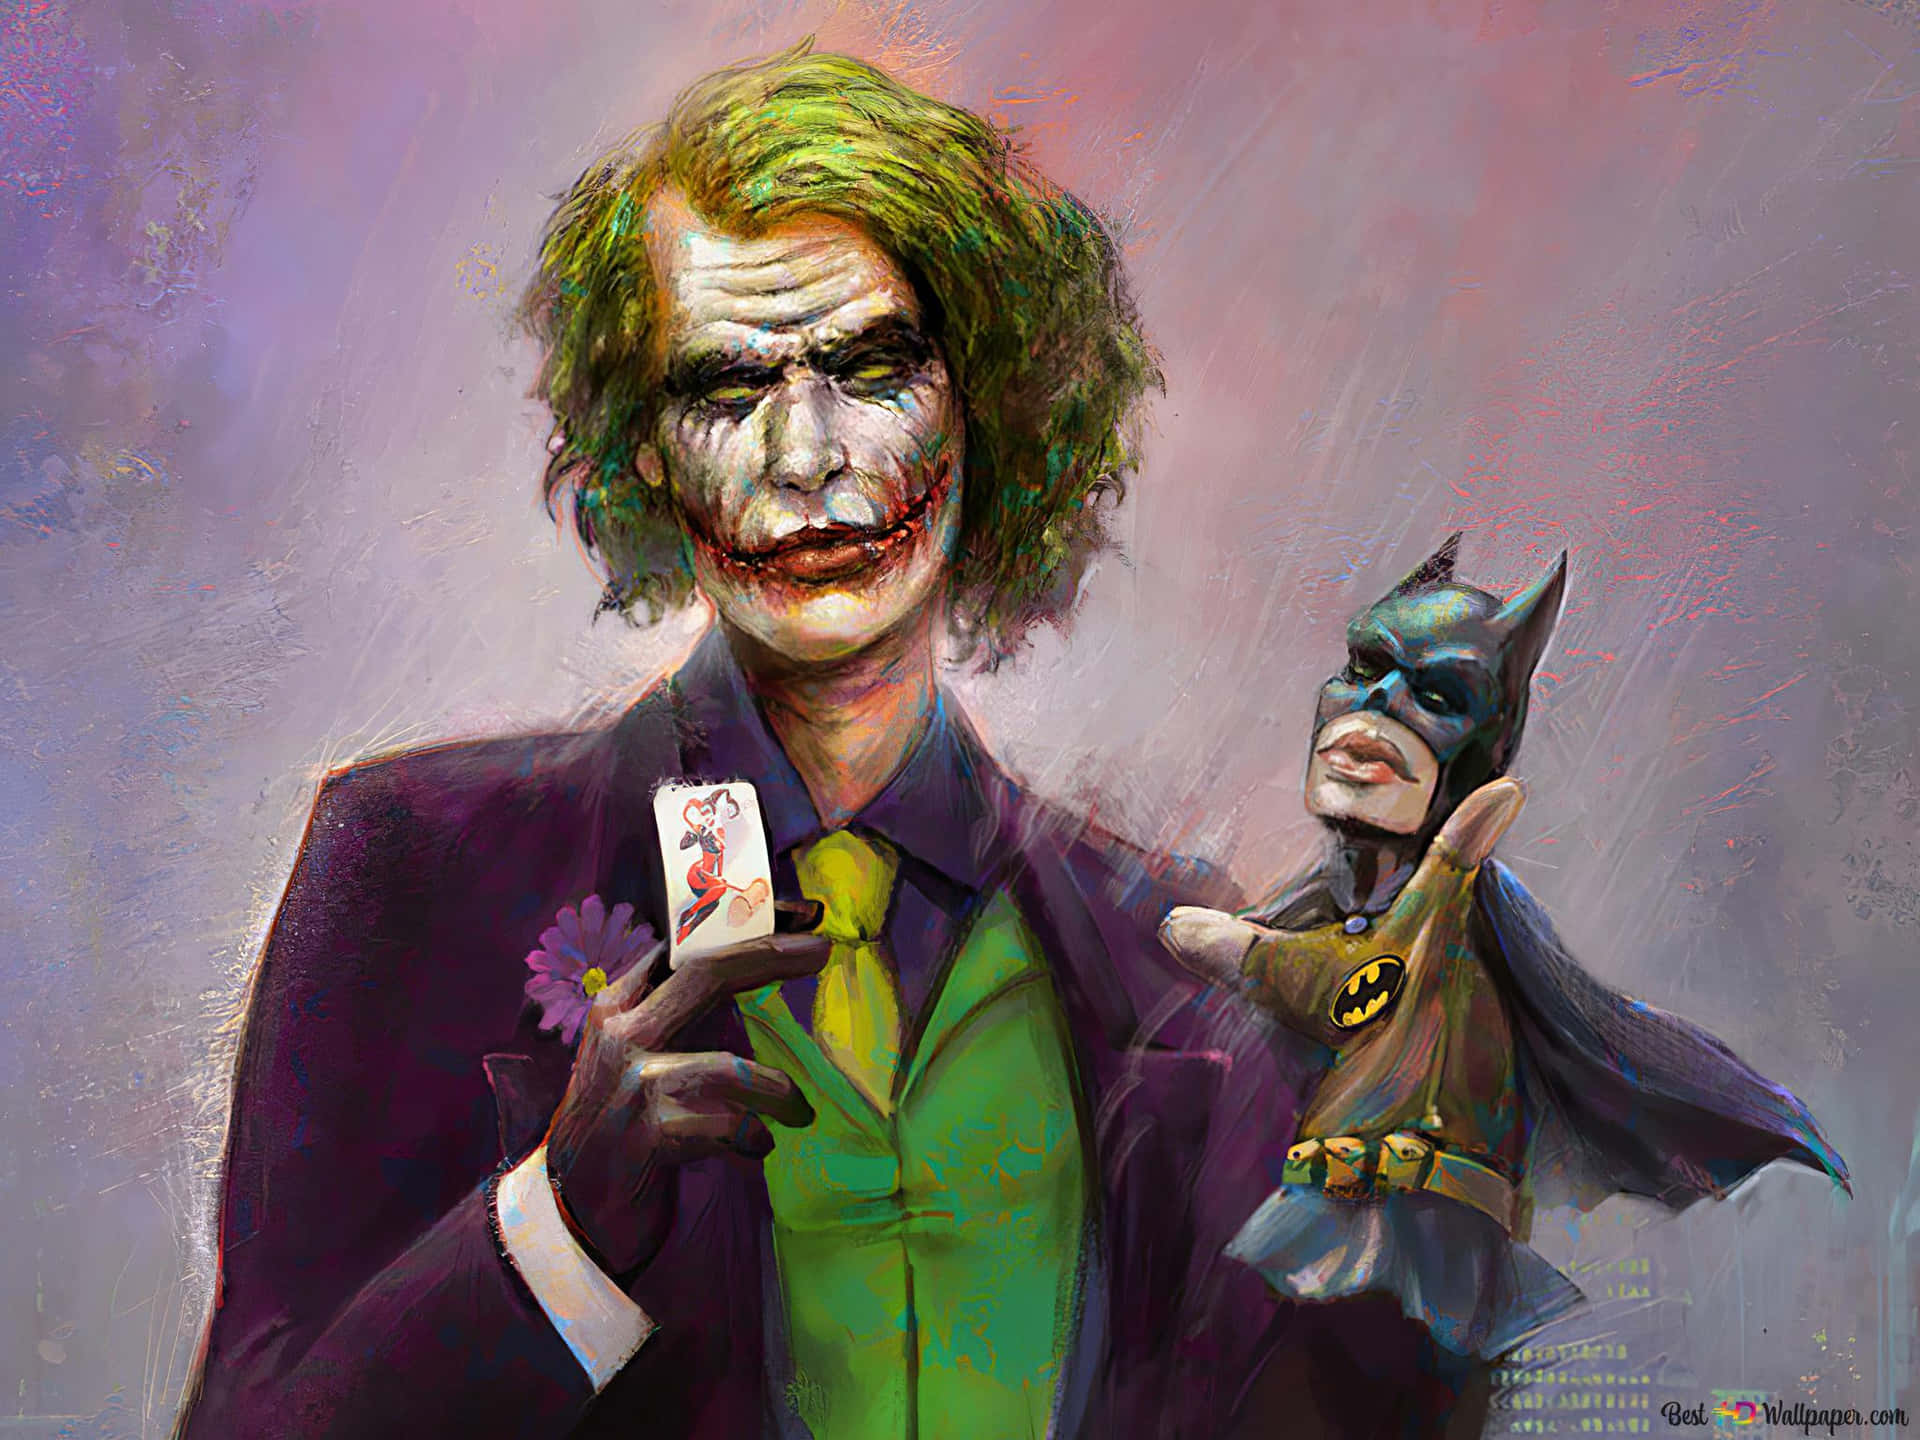 Betretensie Das Chaos! Ihr Lieblingsbösewicht Aus Den Dc Comics - Der Joker! Wallpaper